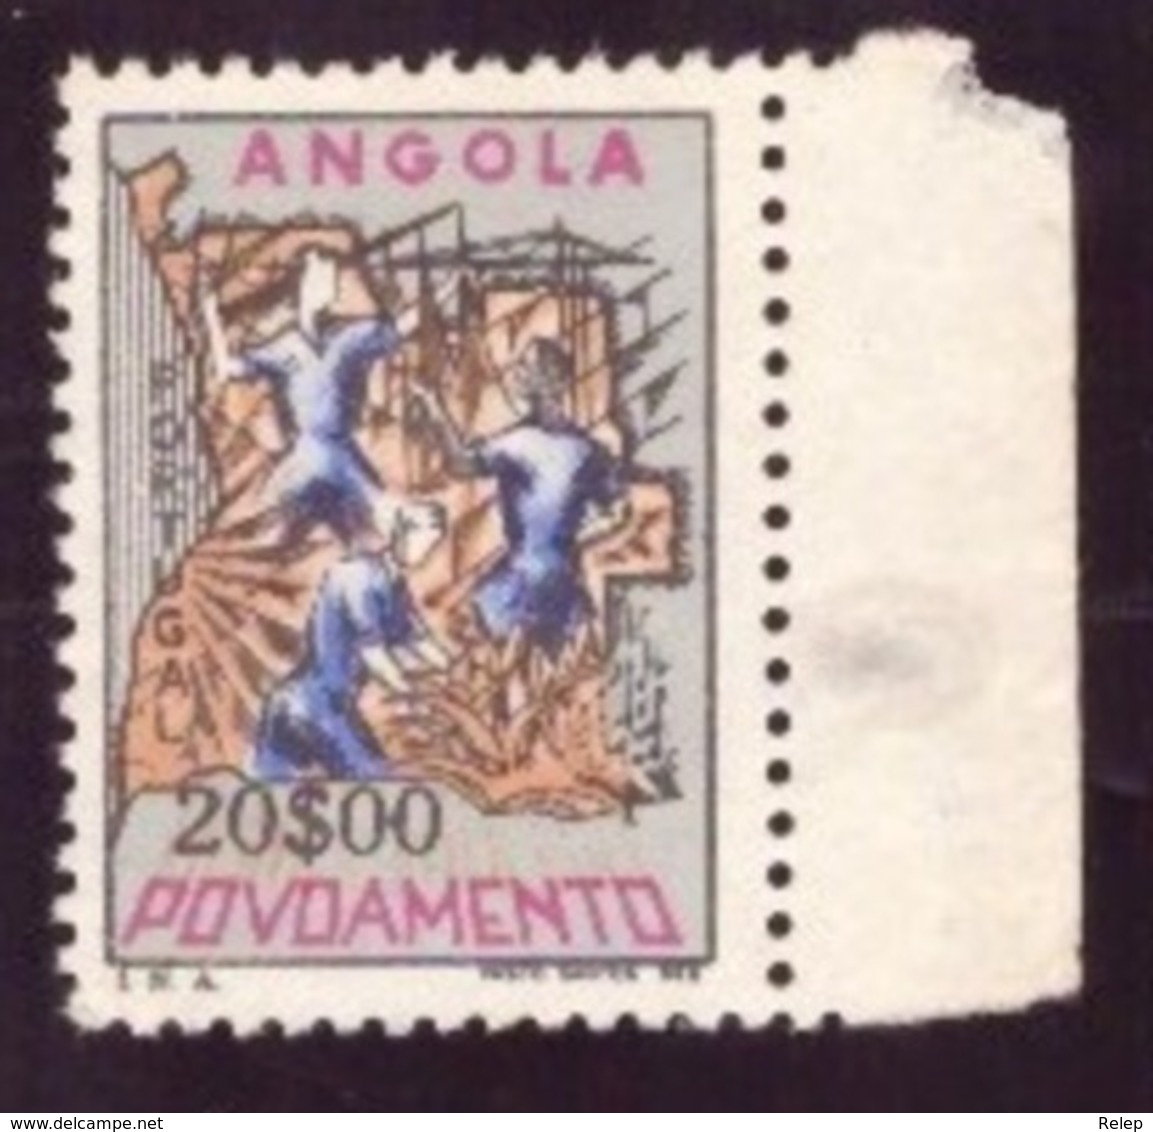 Angola 1965 - Selos De Assistëncia  - Povoamento 20$00 Cond. MNH #  Settlers In Angola - Angola